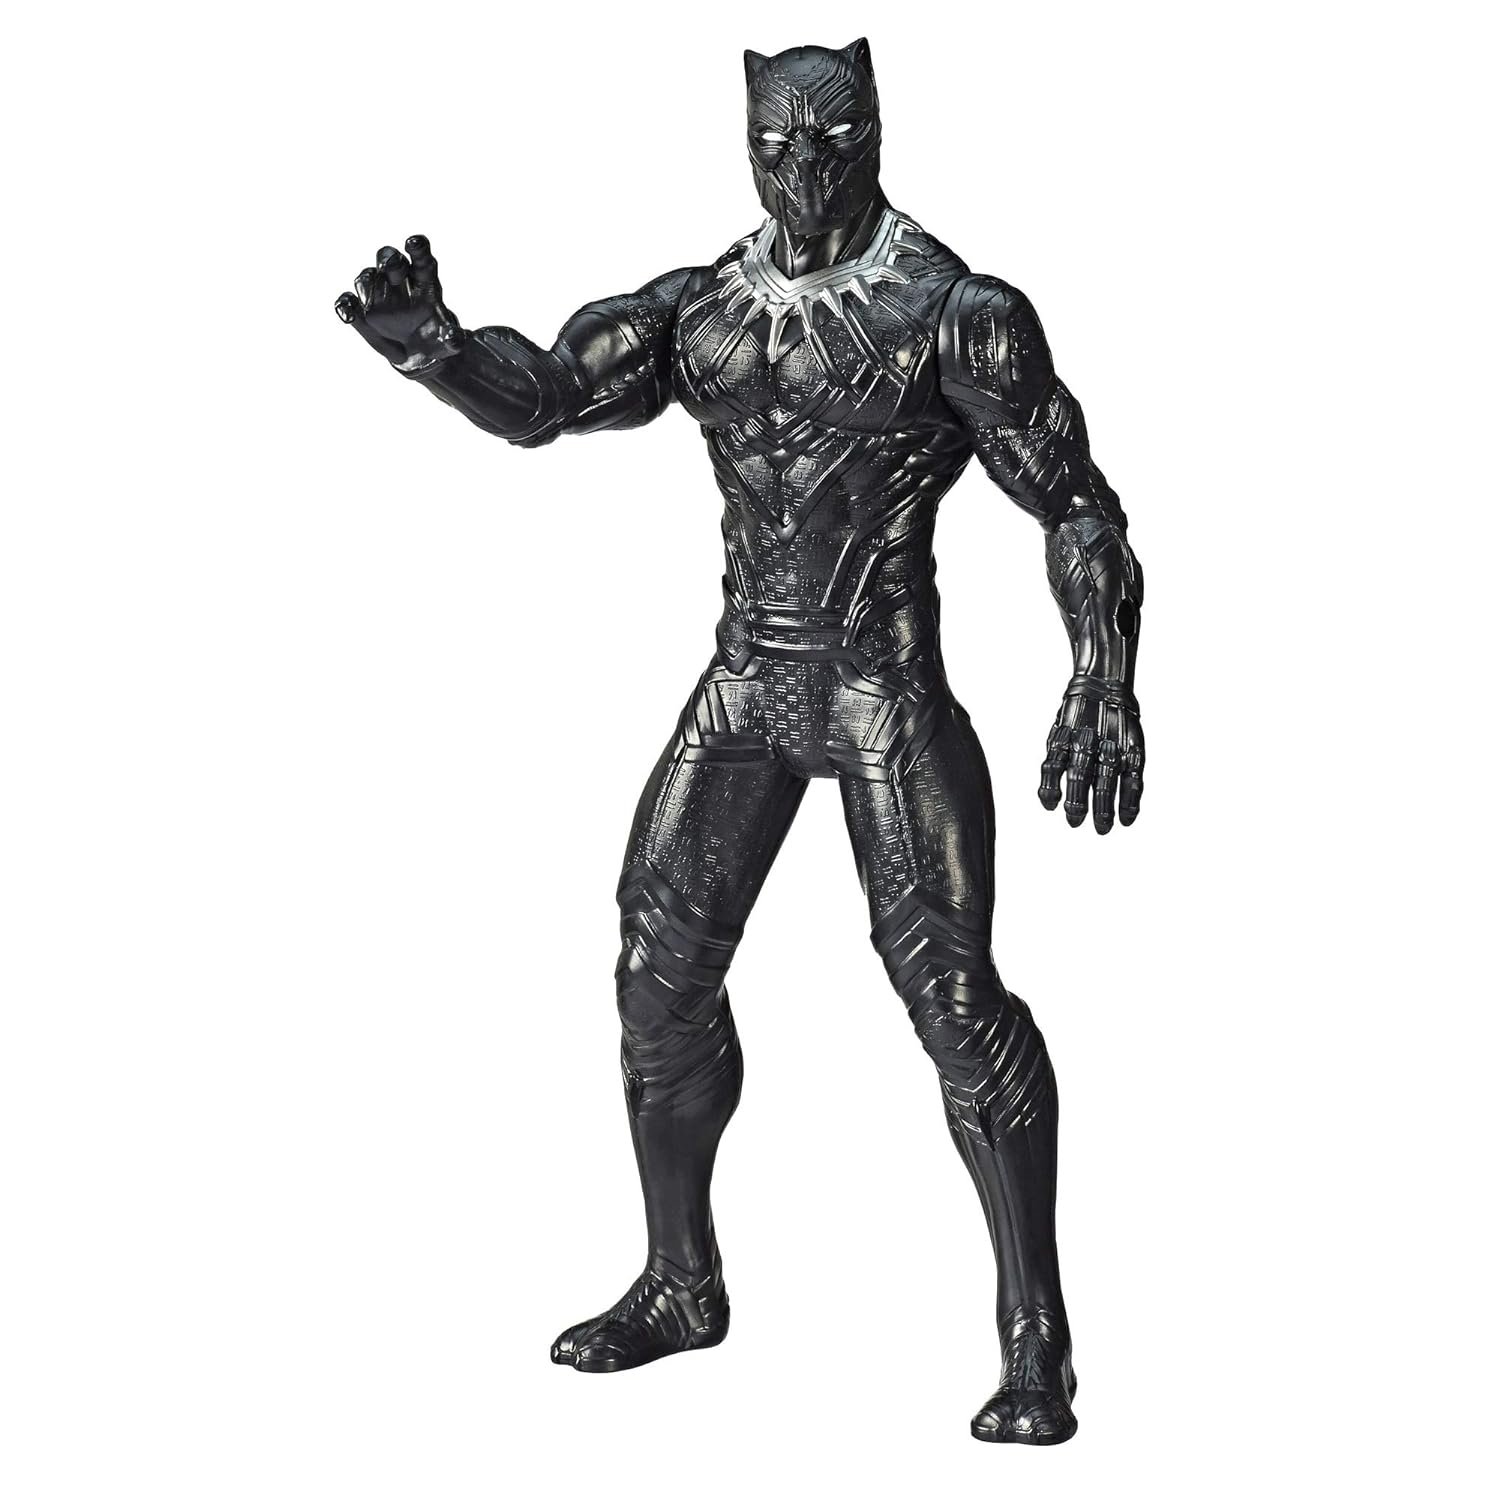 Marvel Black Panther Action Figure image 1